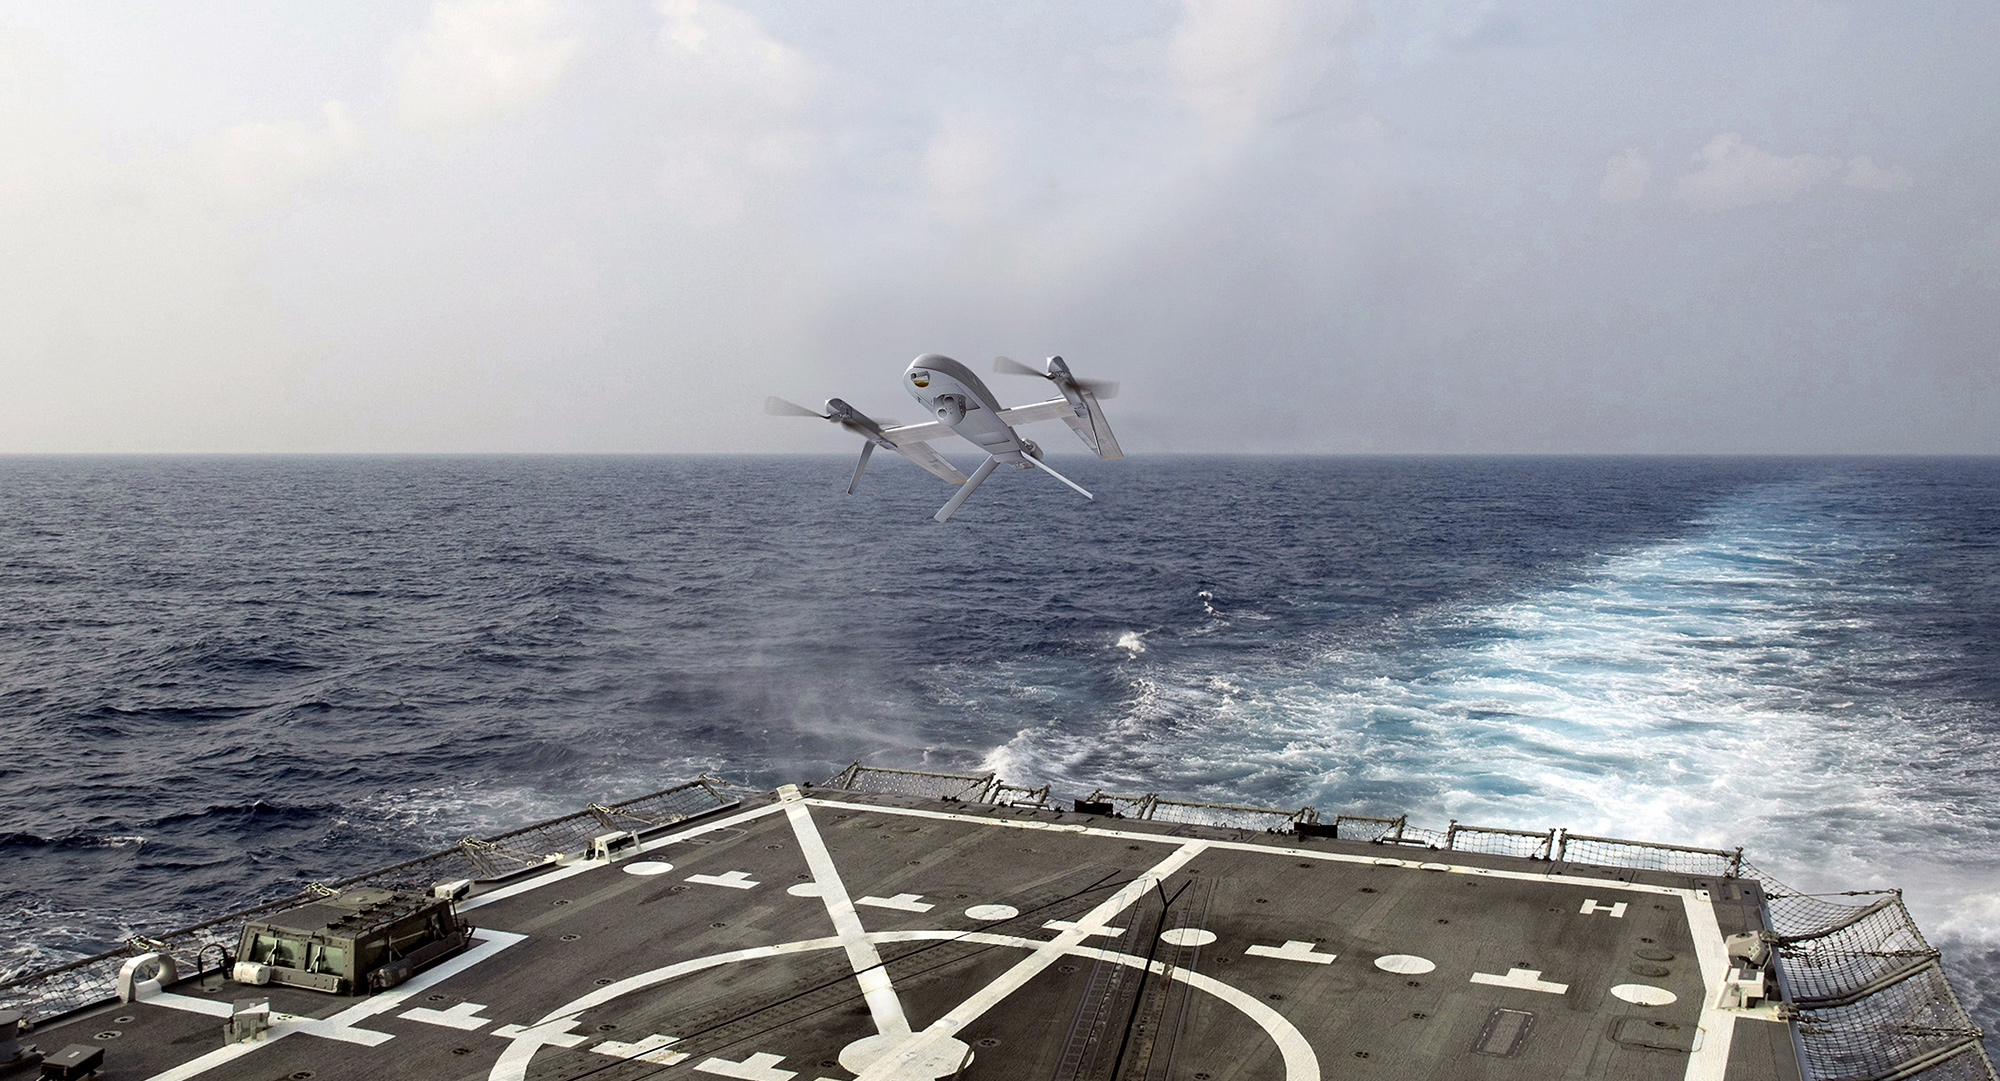 Autonomous aircraft landing on a naval ship in the ocean